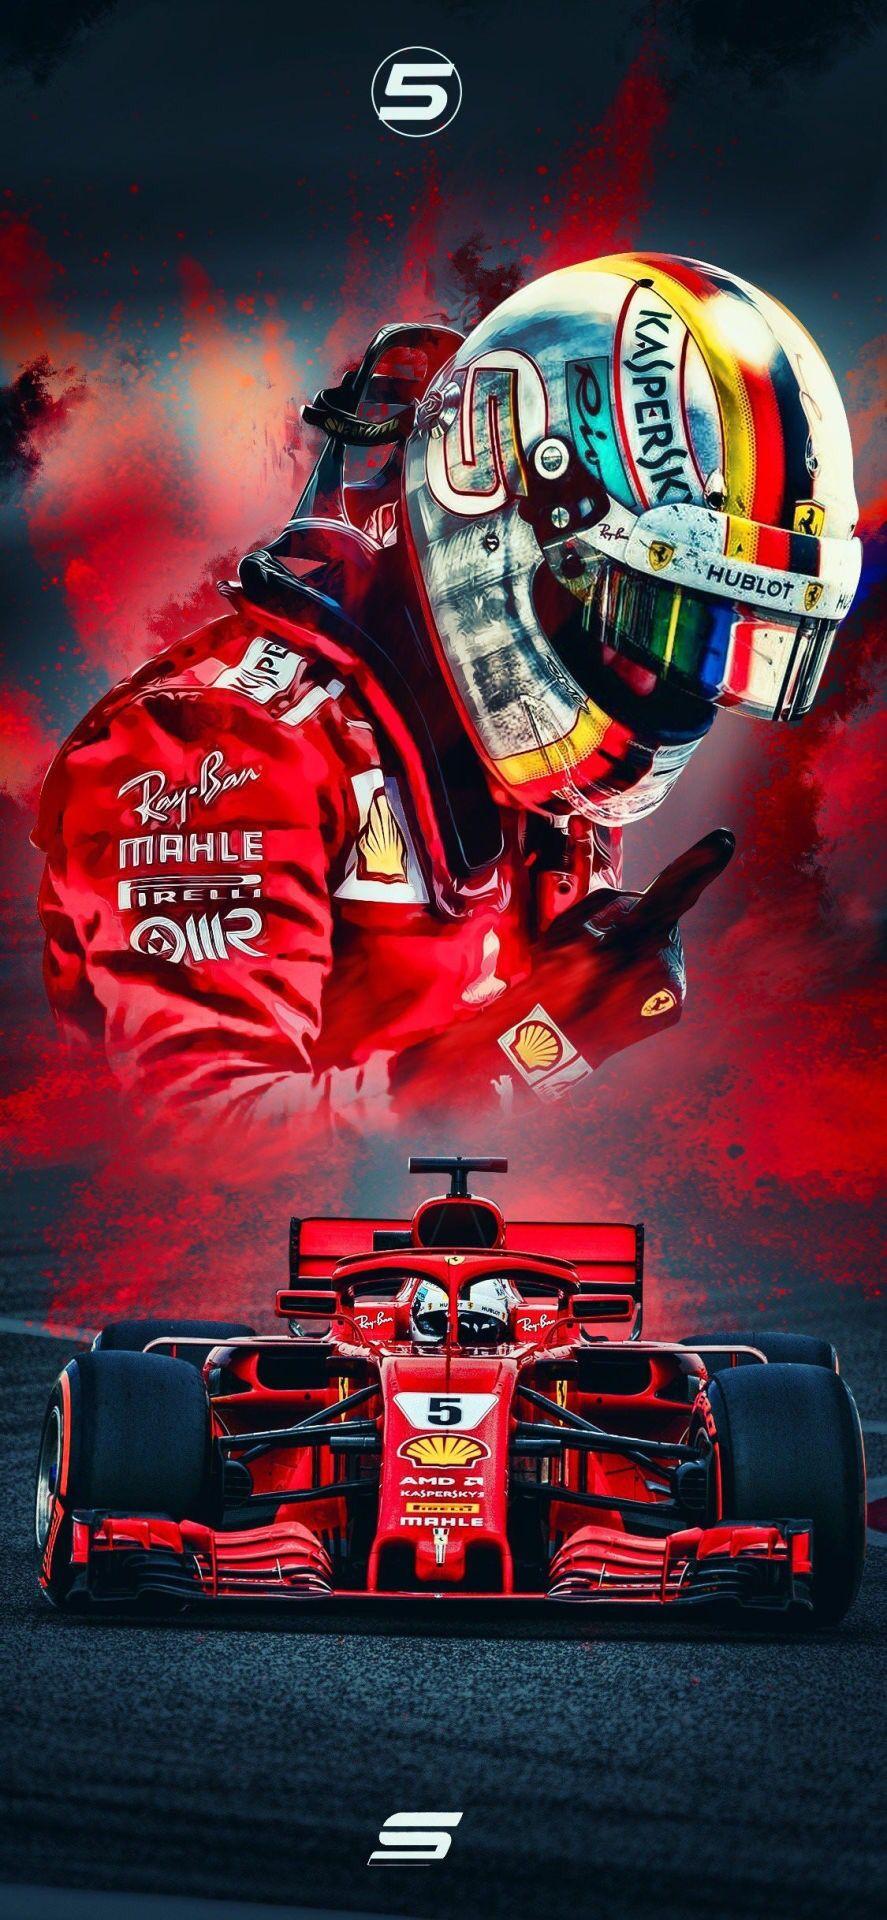 Scuderia Ferrari on Twitter Its wallpaper wednesday Enjoy this weeks  drop  essereFerrari  WallpaperWednesday httpstcoSQJd7mC8P9   Twitter